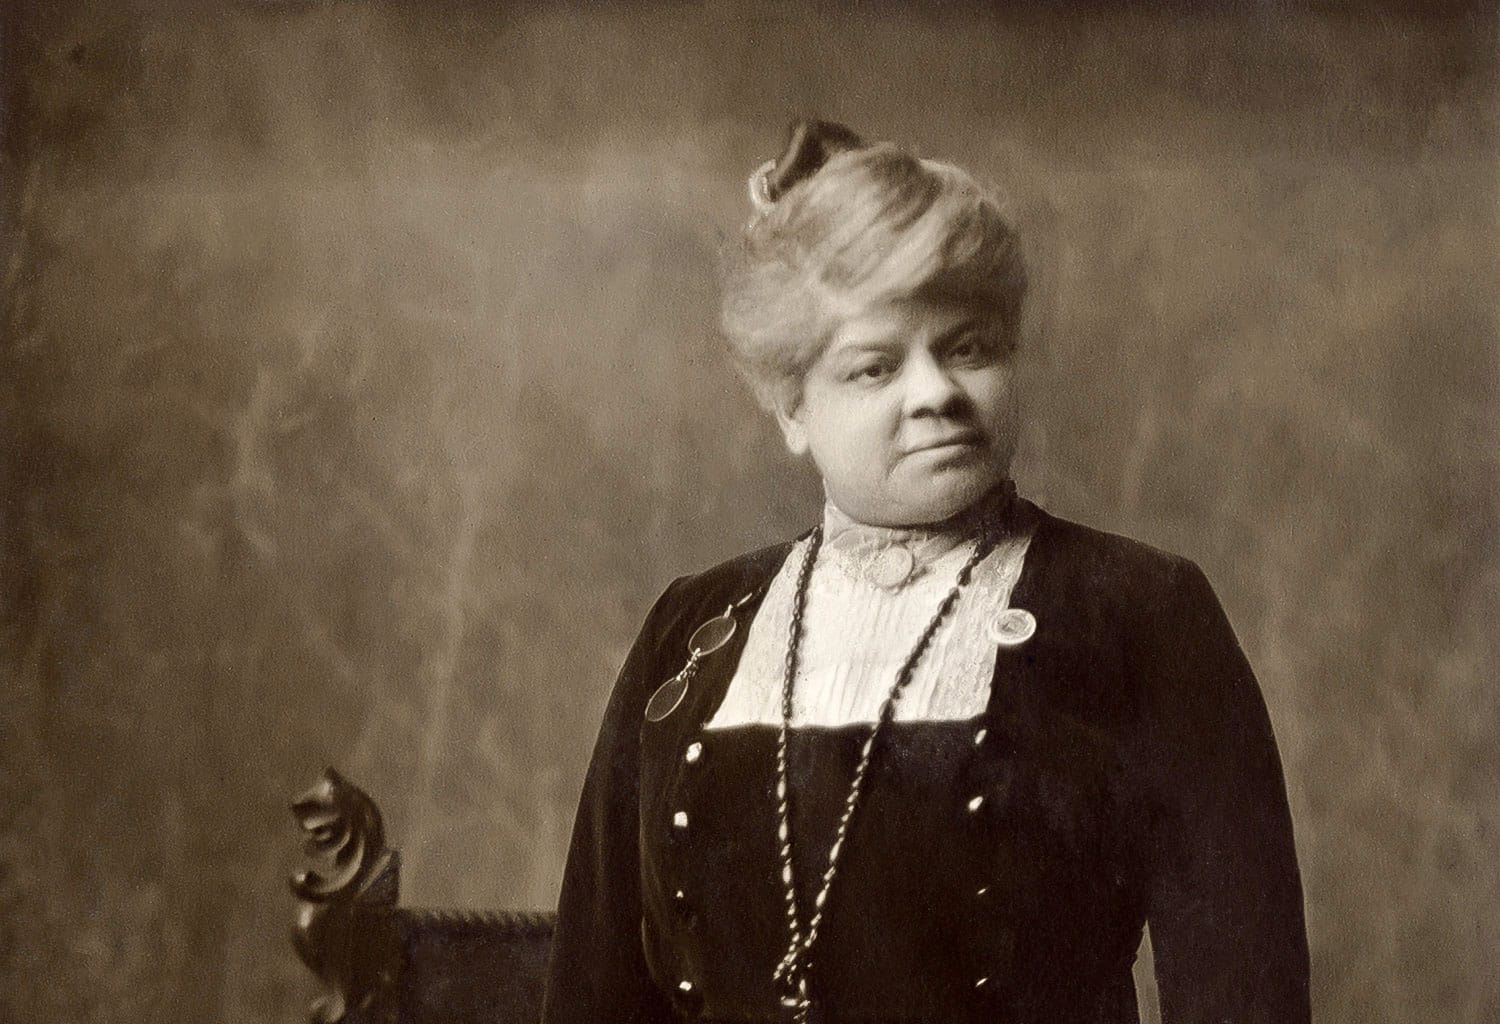 Ida B. Wells portrait